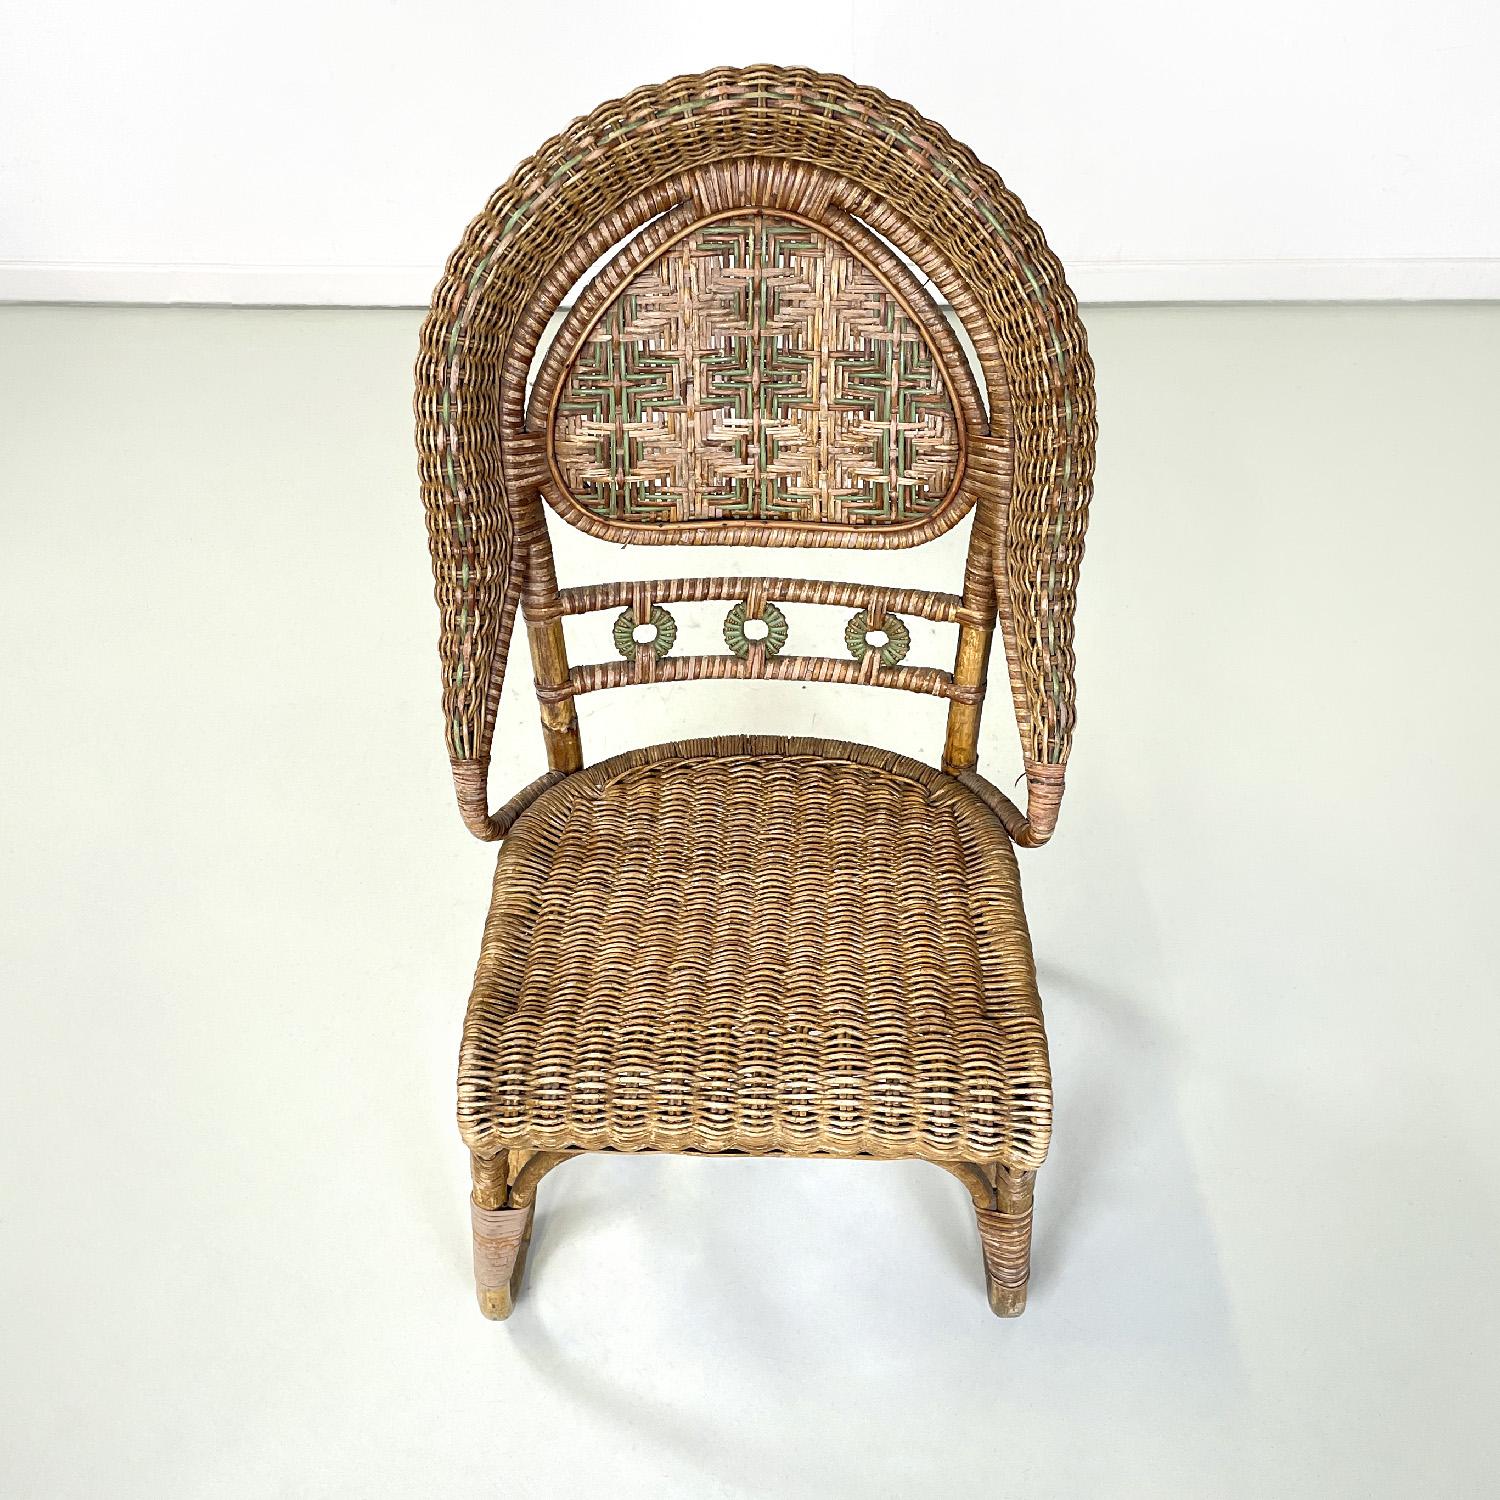 Italian antique rattan chairs by Mongiardino and Bonacina for Bonacina, 1900s For Sale 3